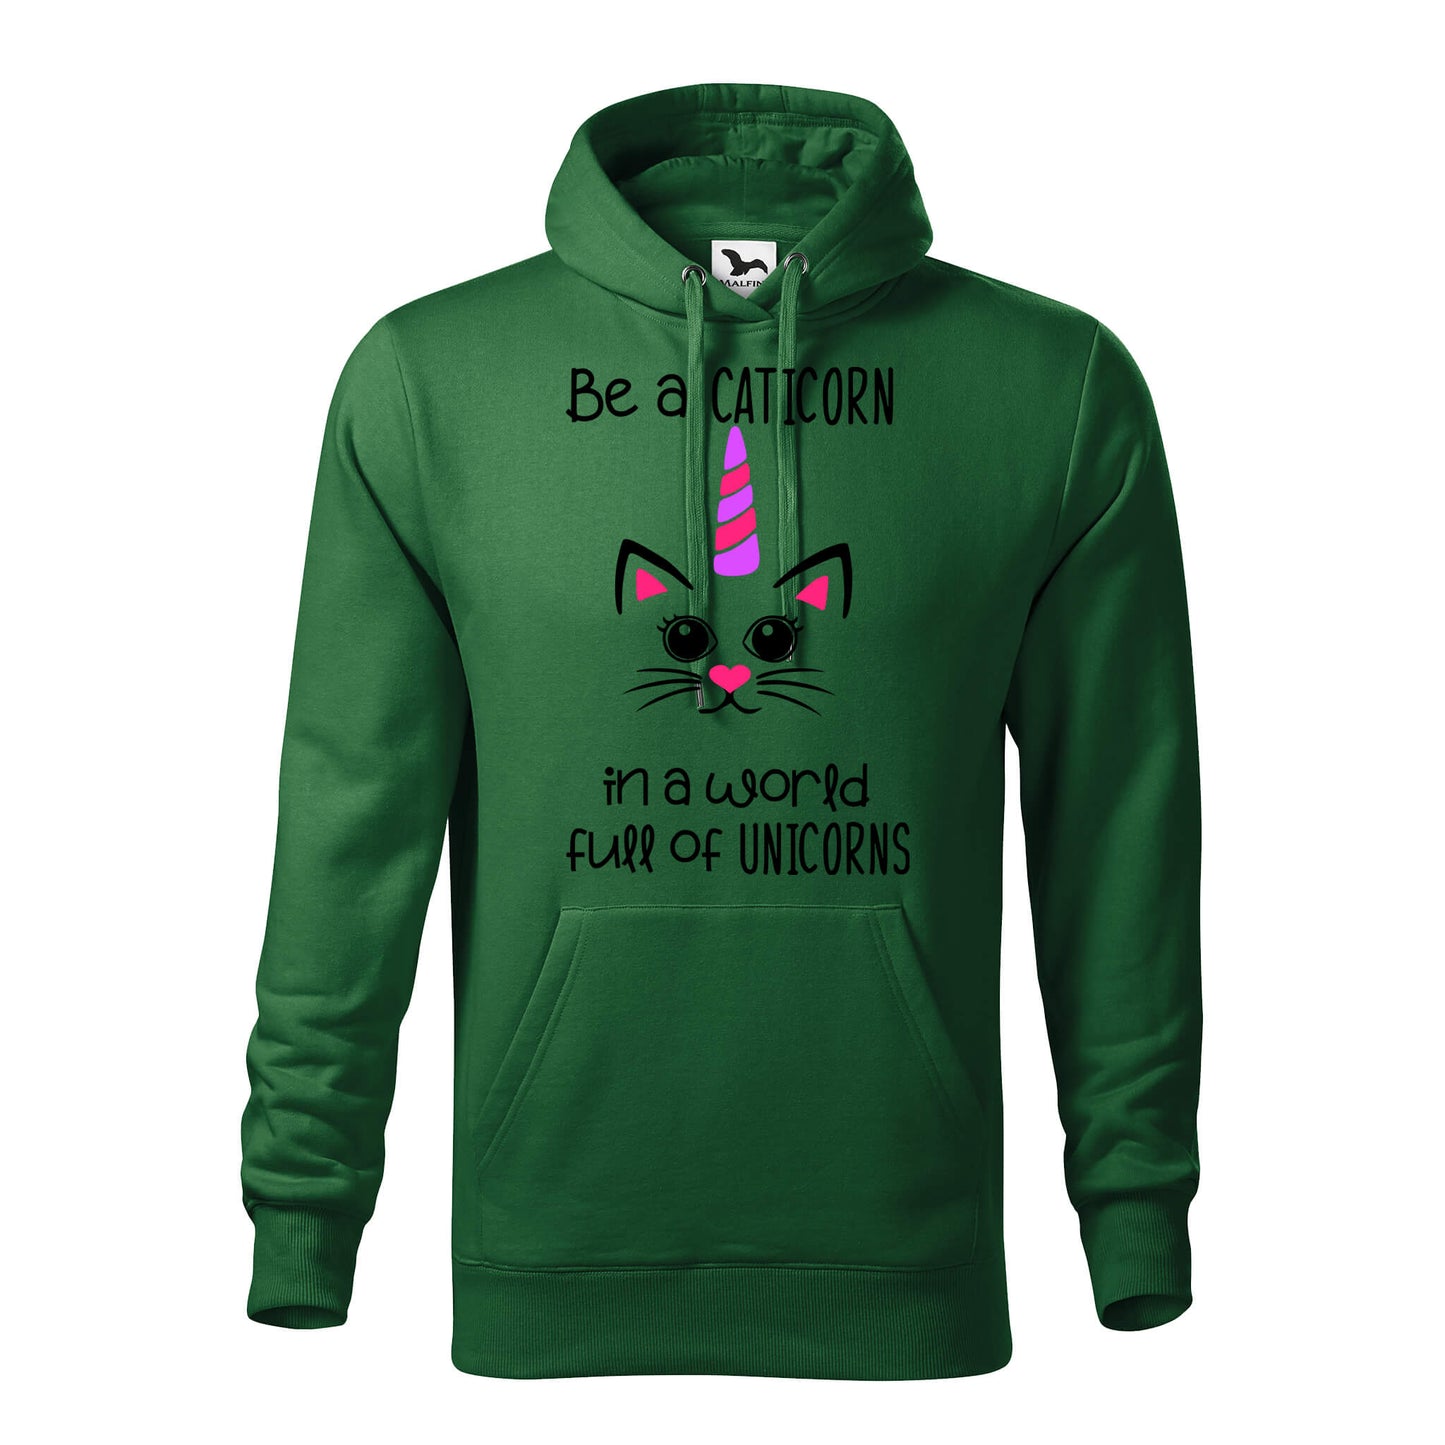 Caticorn hoodie - rvdesignprint